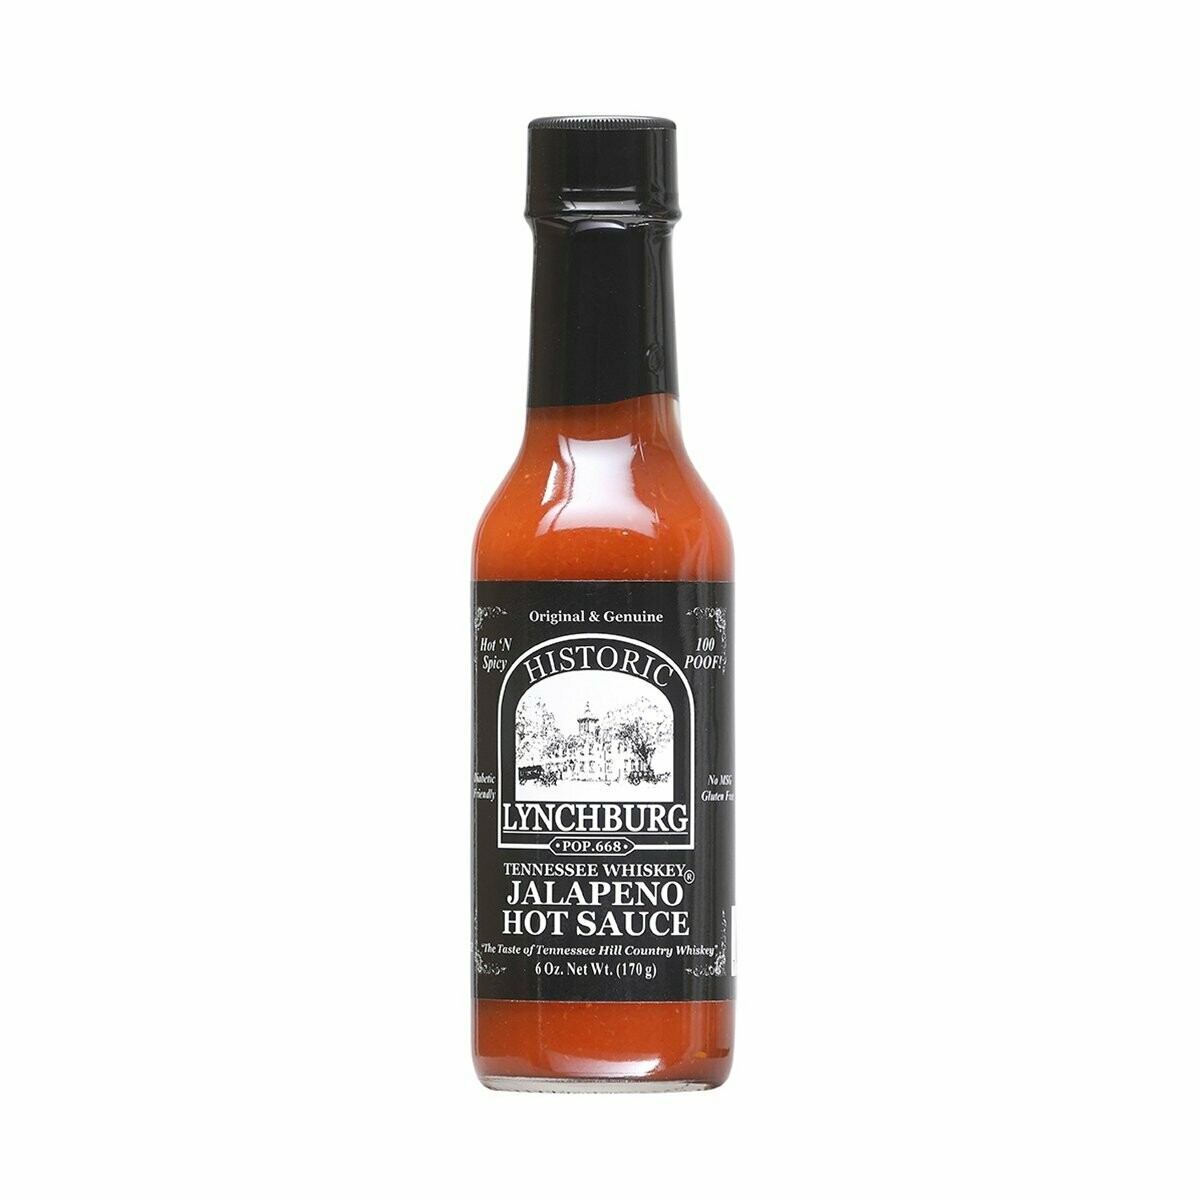 Historic Lynchburg Tennessee Whiskey Jalapeno Hot Sauce - 5 oz